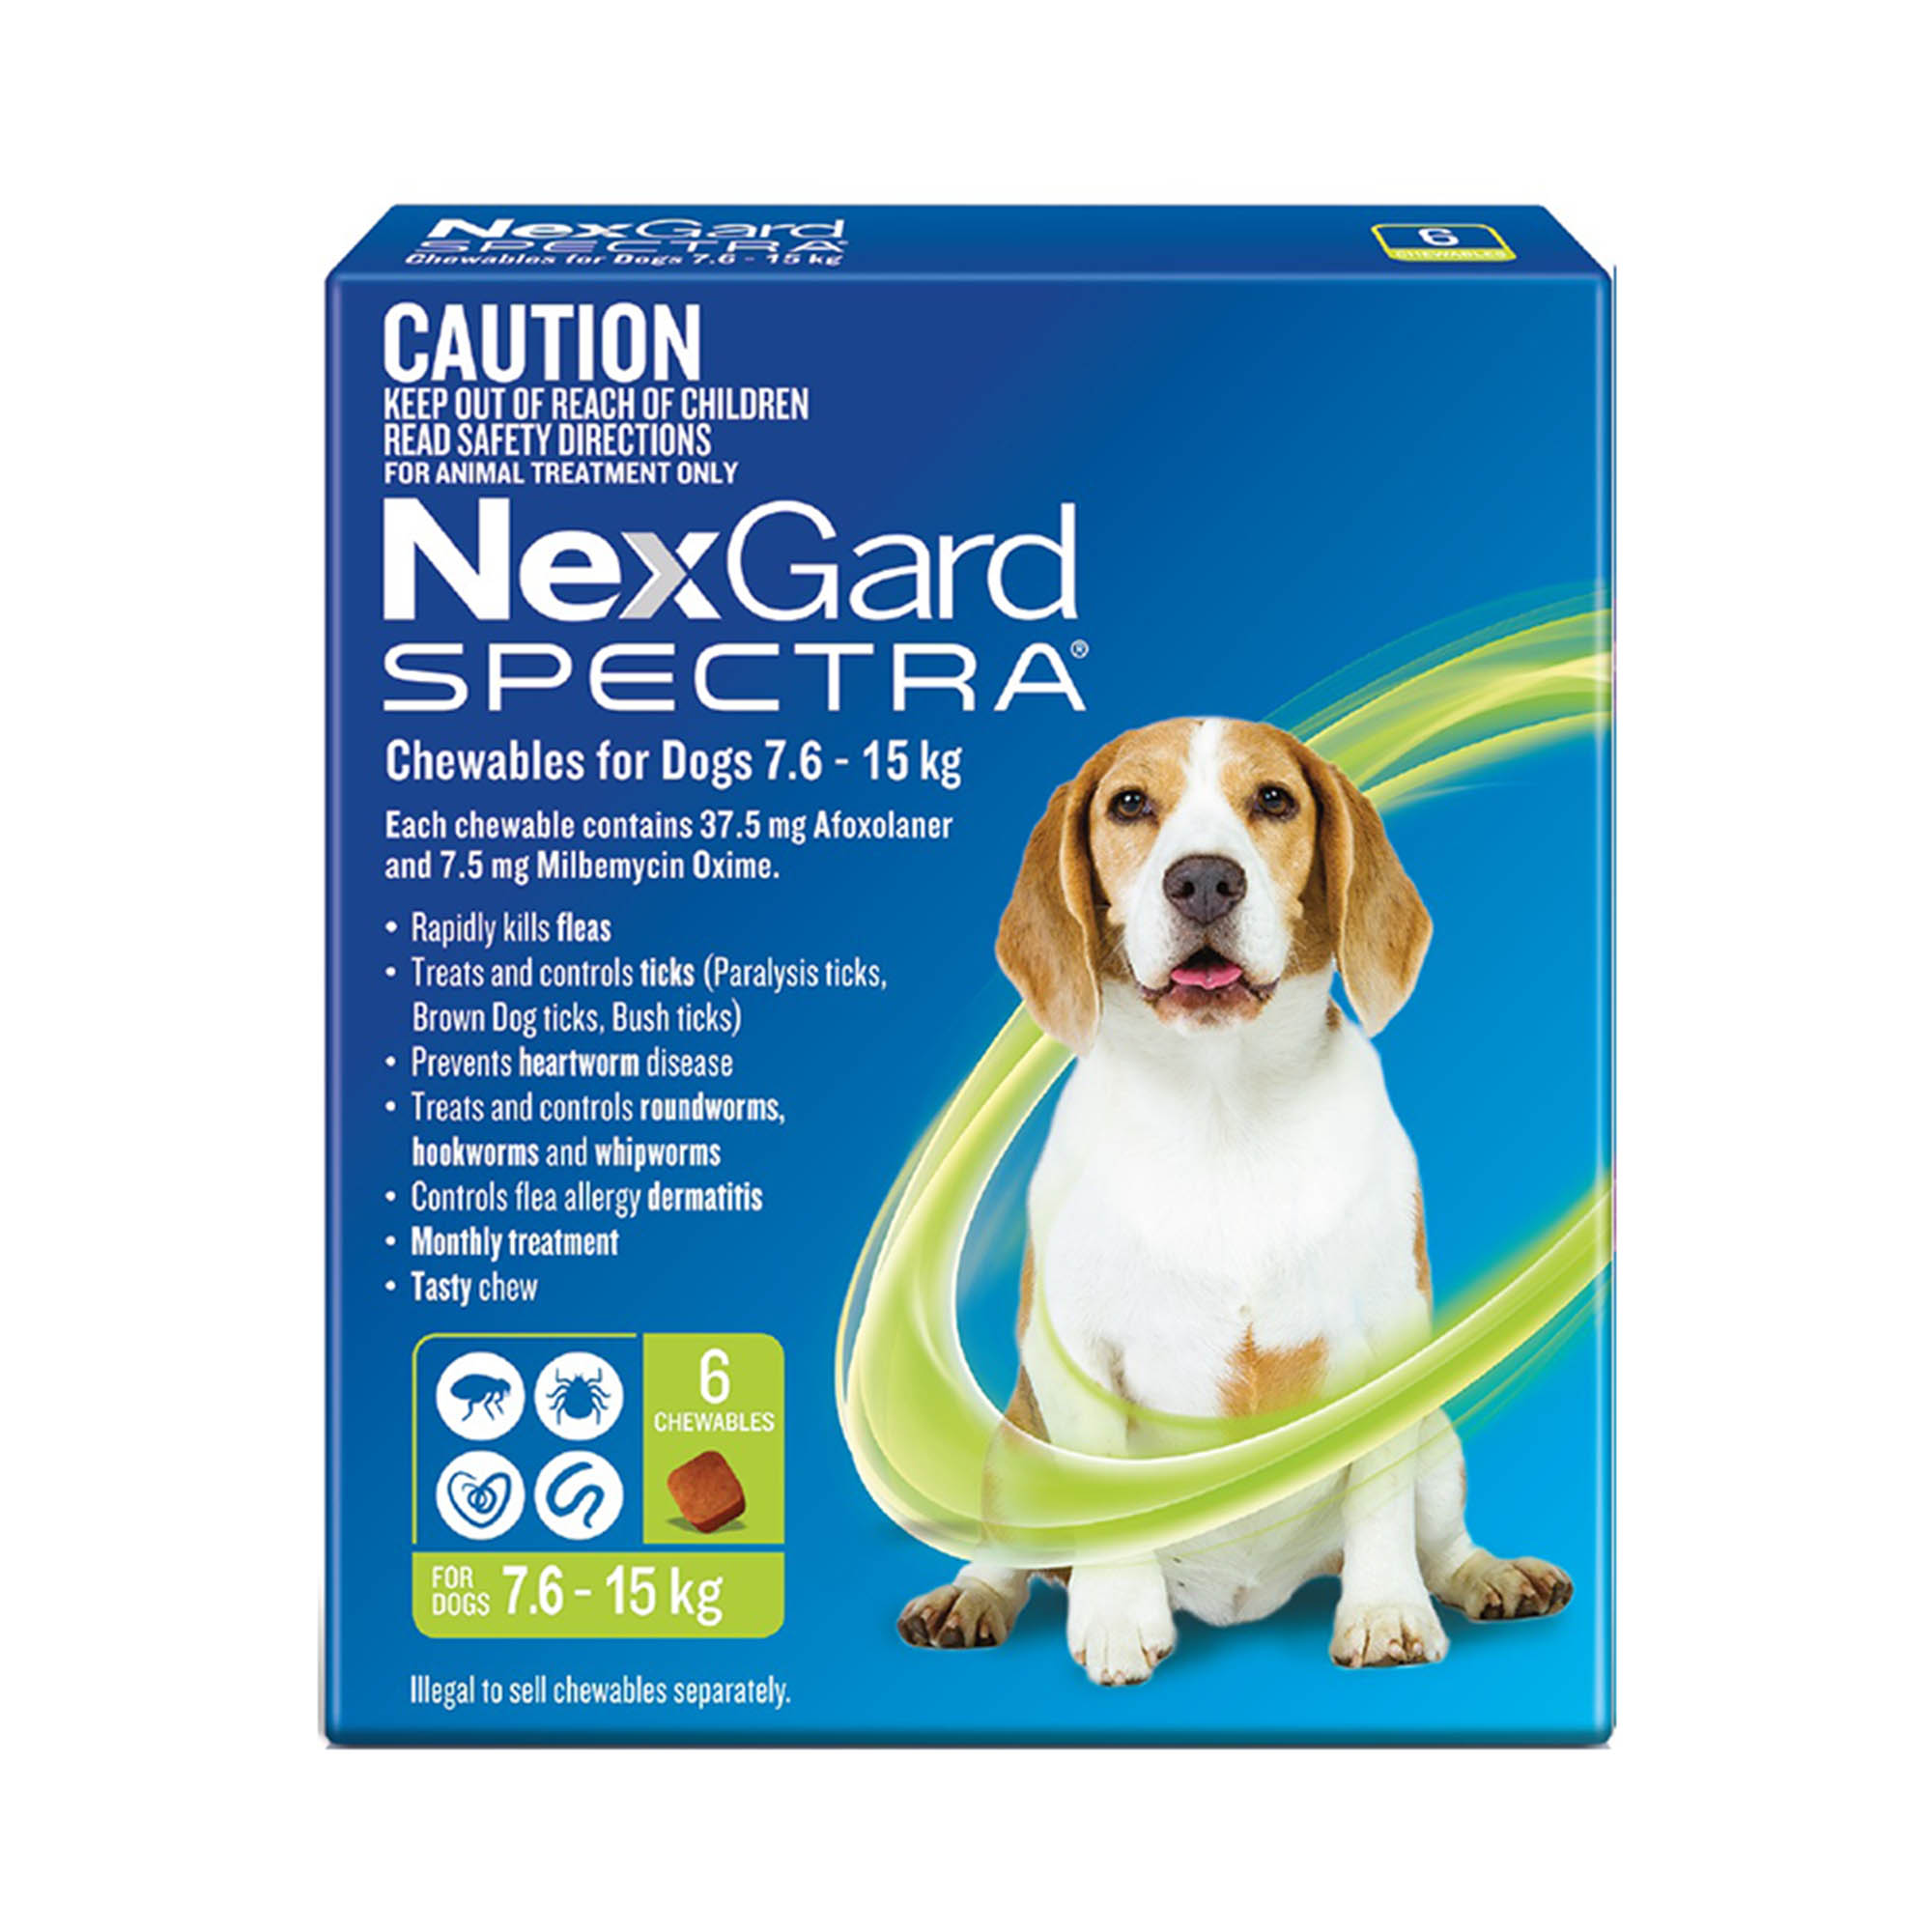 [1 viên] Nexgard Spectra cho chó từ 7.6 đến 15kg viên nhai trị ve, ghẻ, sổ giun